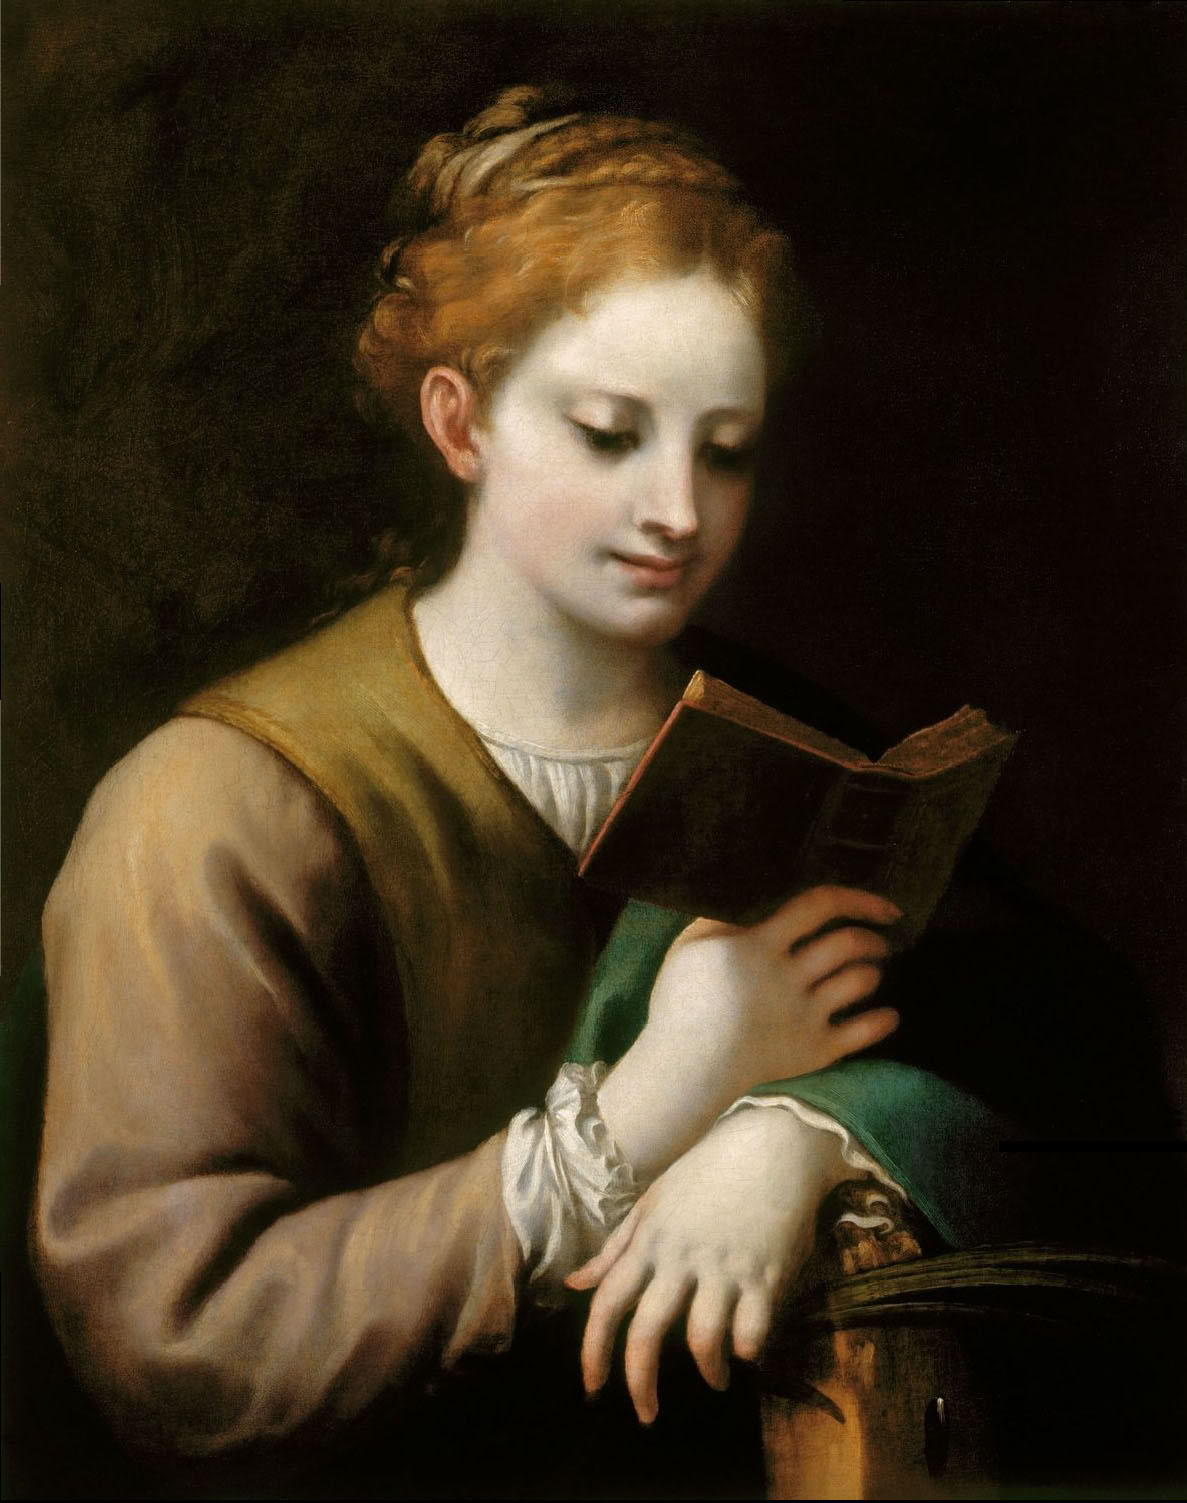 Corregio St Catherine Reading (c.1530-2). Antonio Allegri Correggio (Italian, 1489-1534). Oil on canvas. The Royal Collection